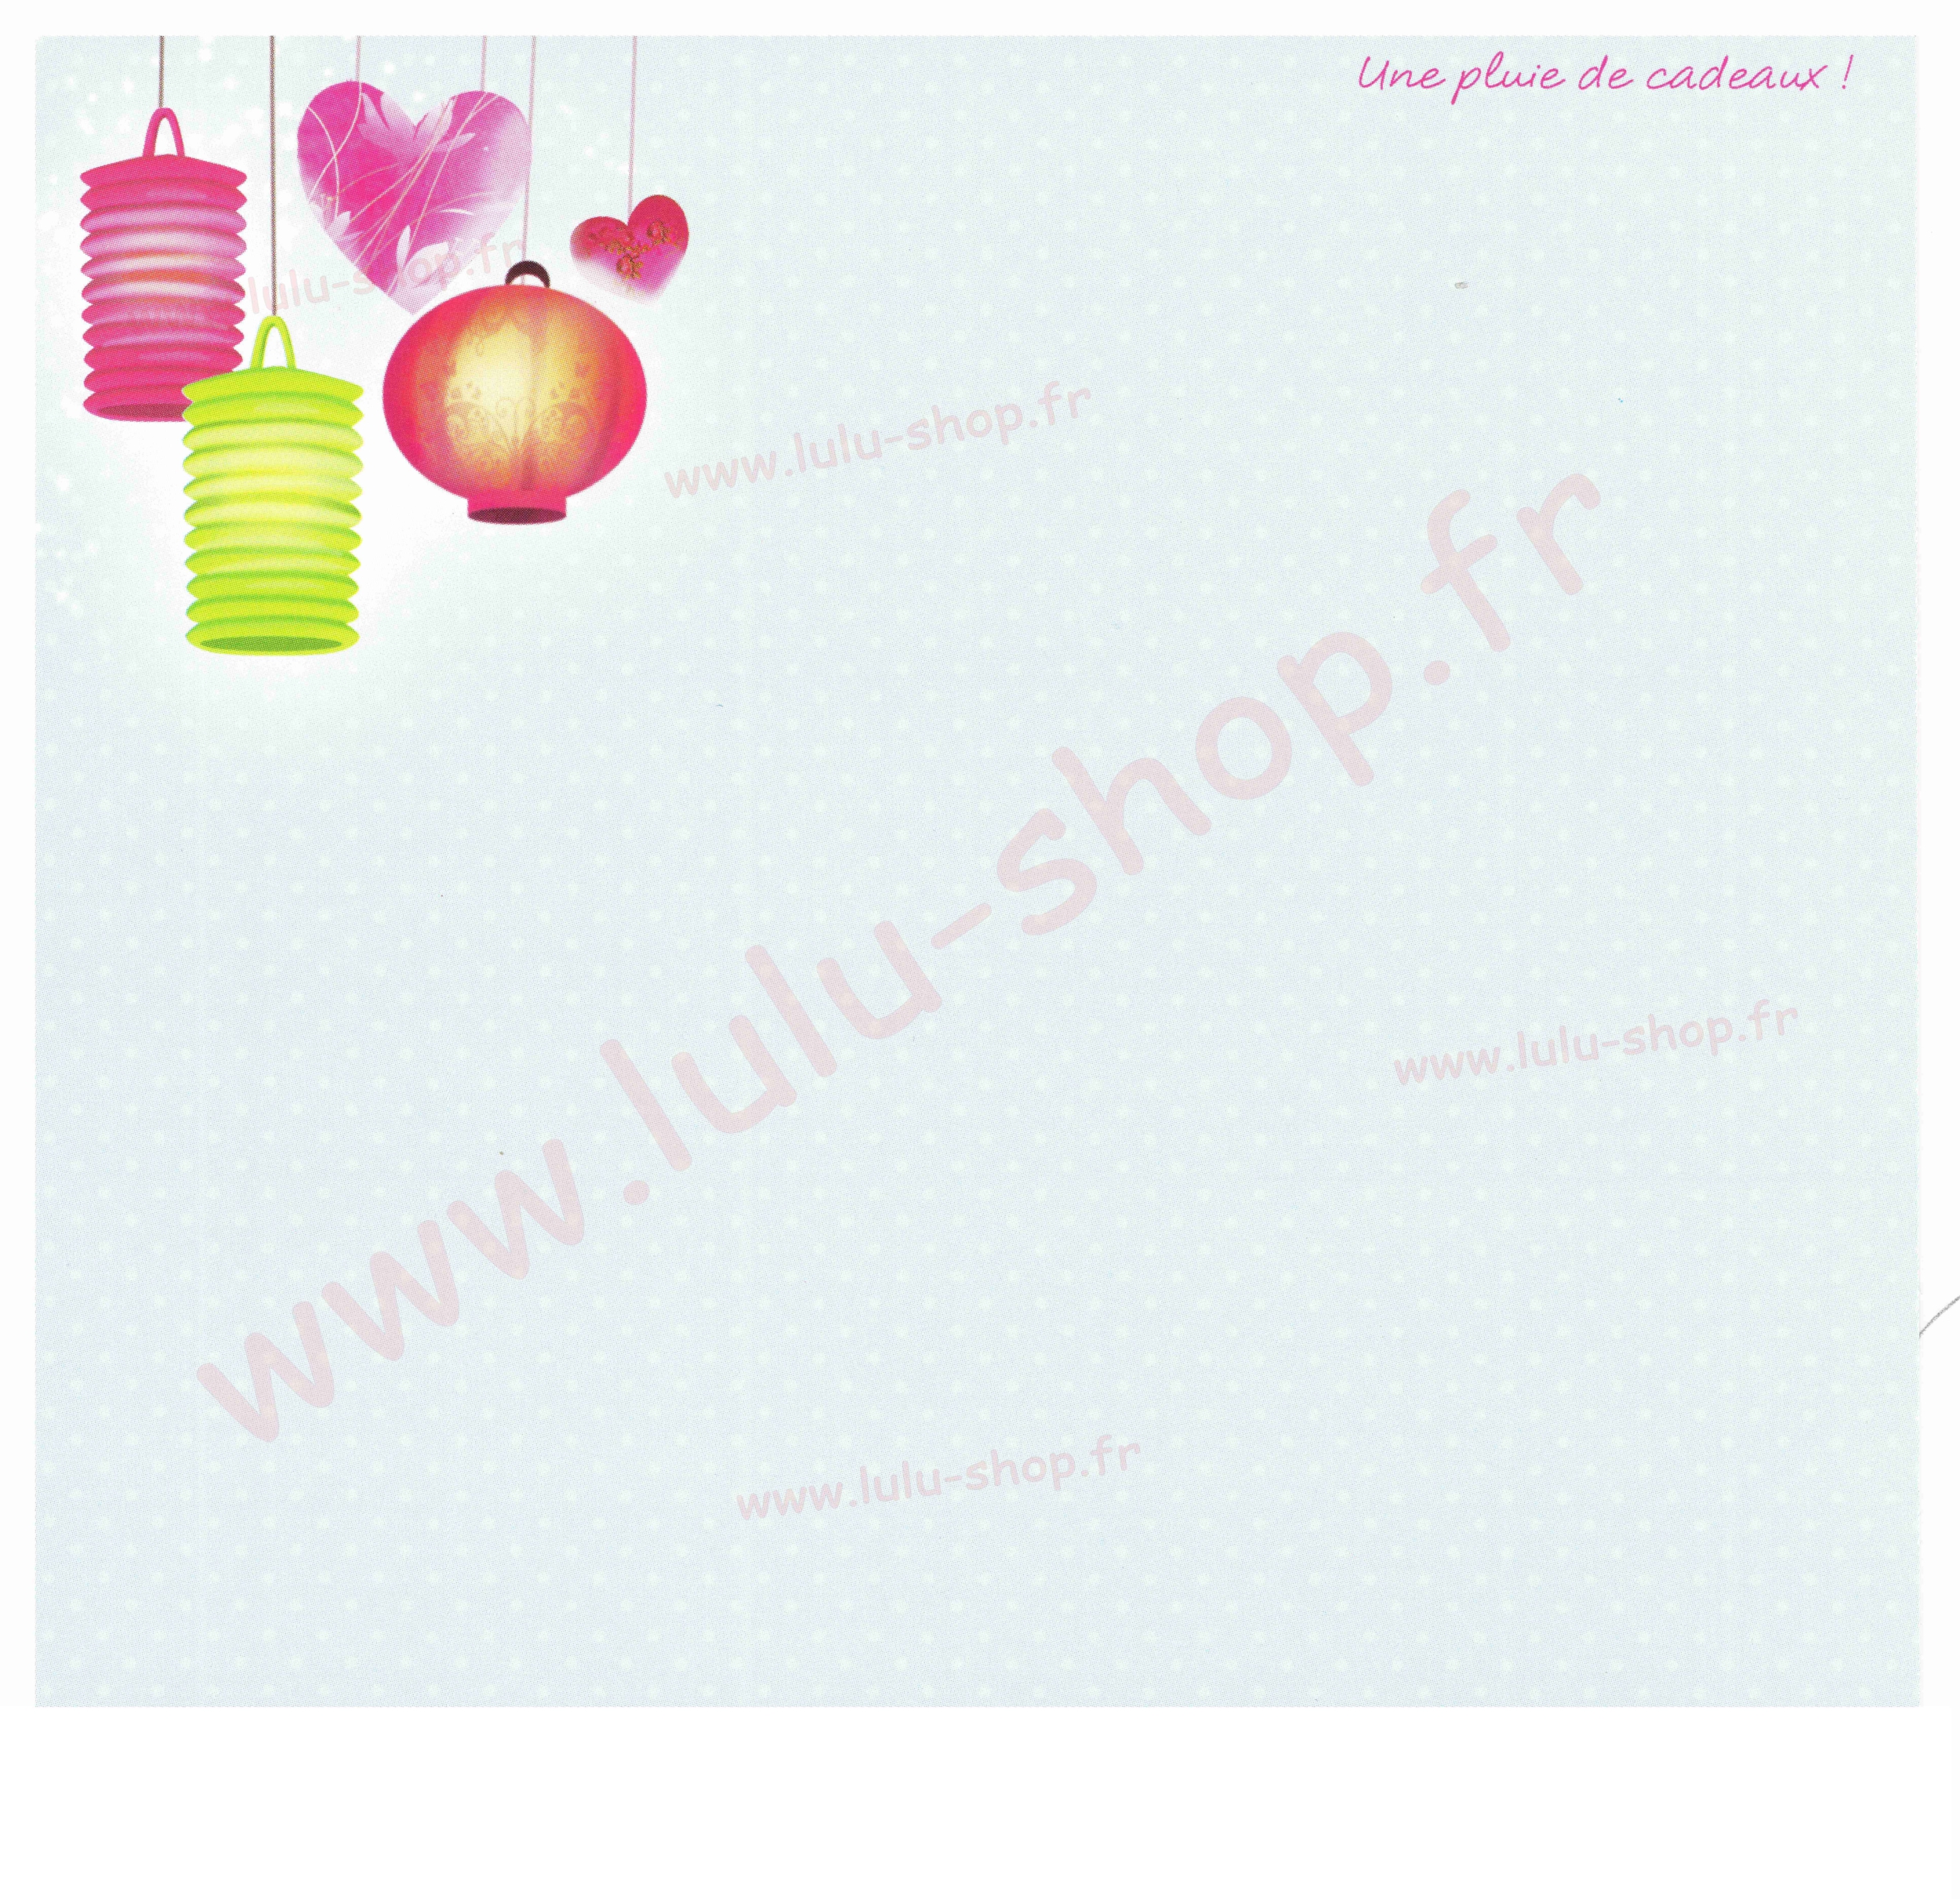 www.lulu-shop.fr Une pluie de cadeaux !